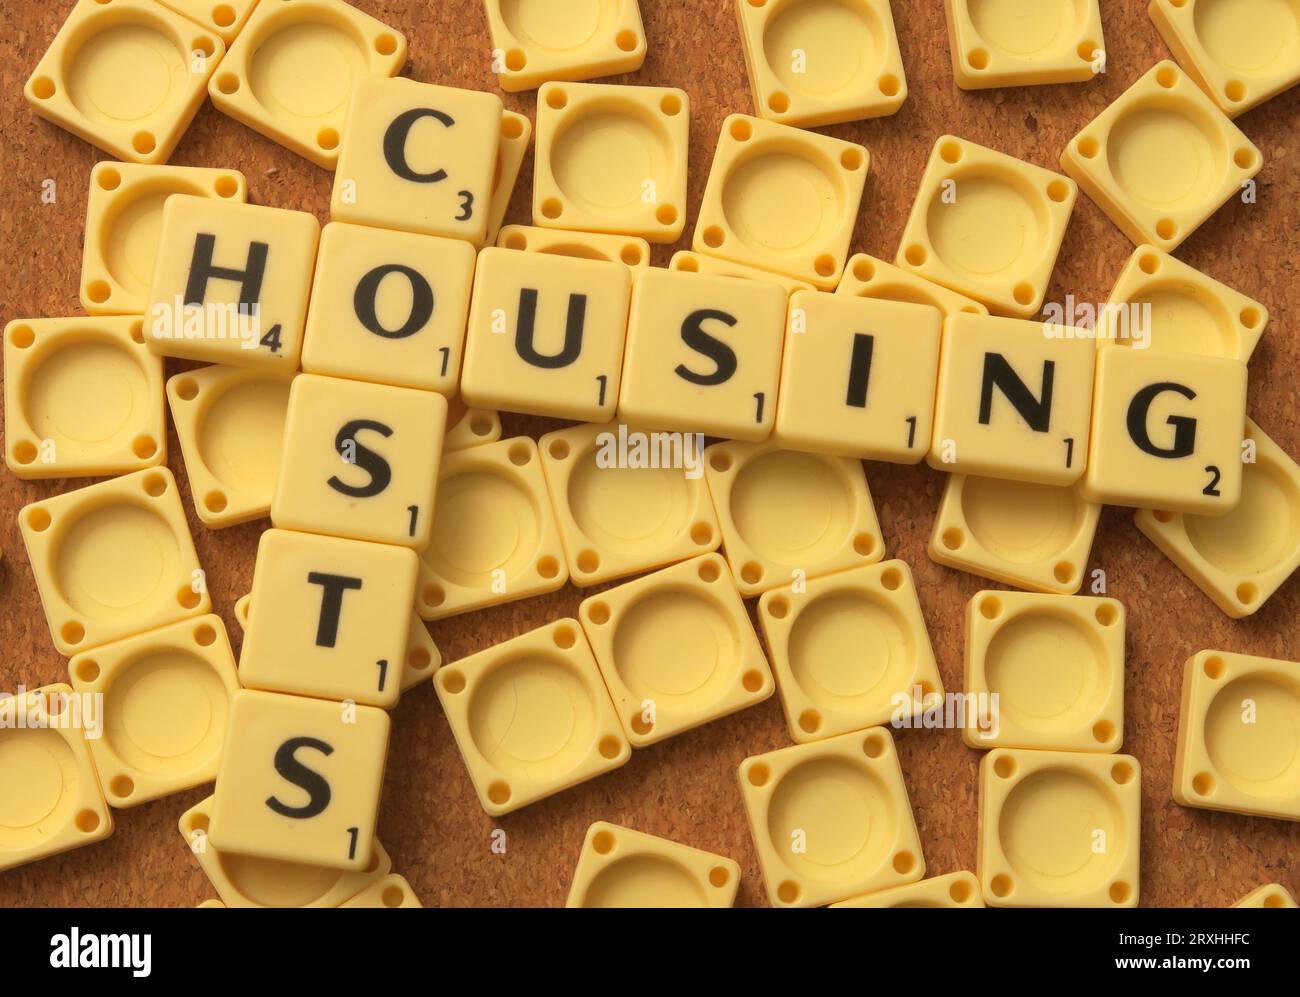 Wohnkosten - in Worten, Scrabble-Buchstaben Stockfoto